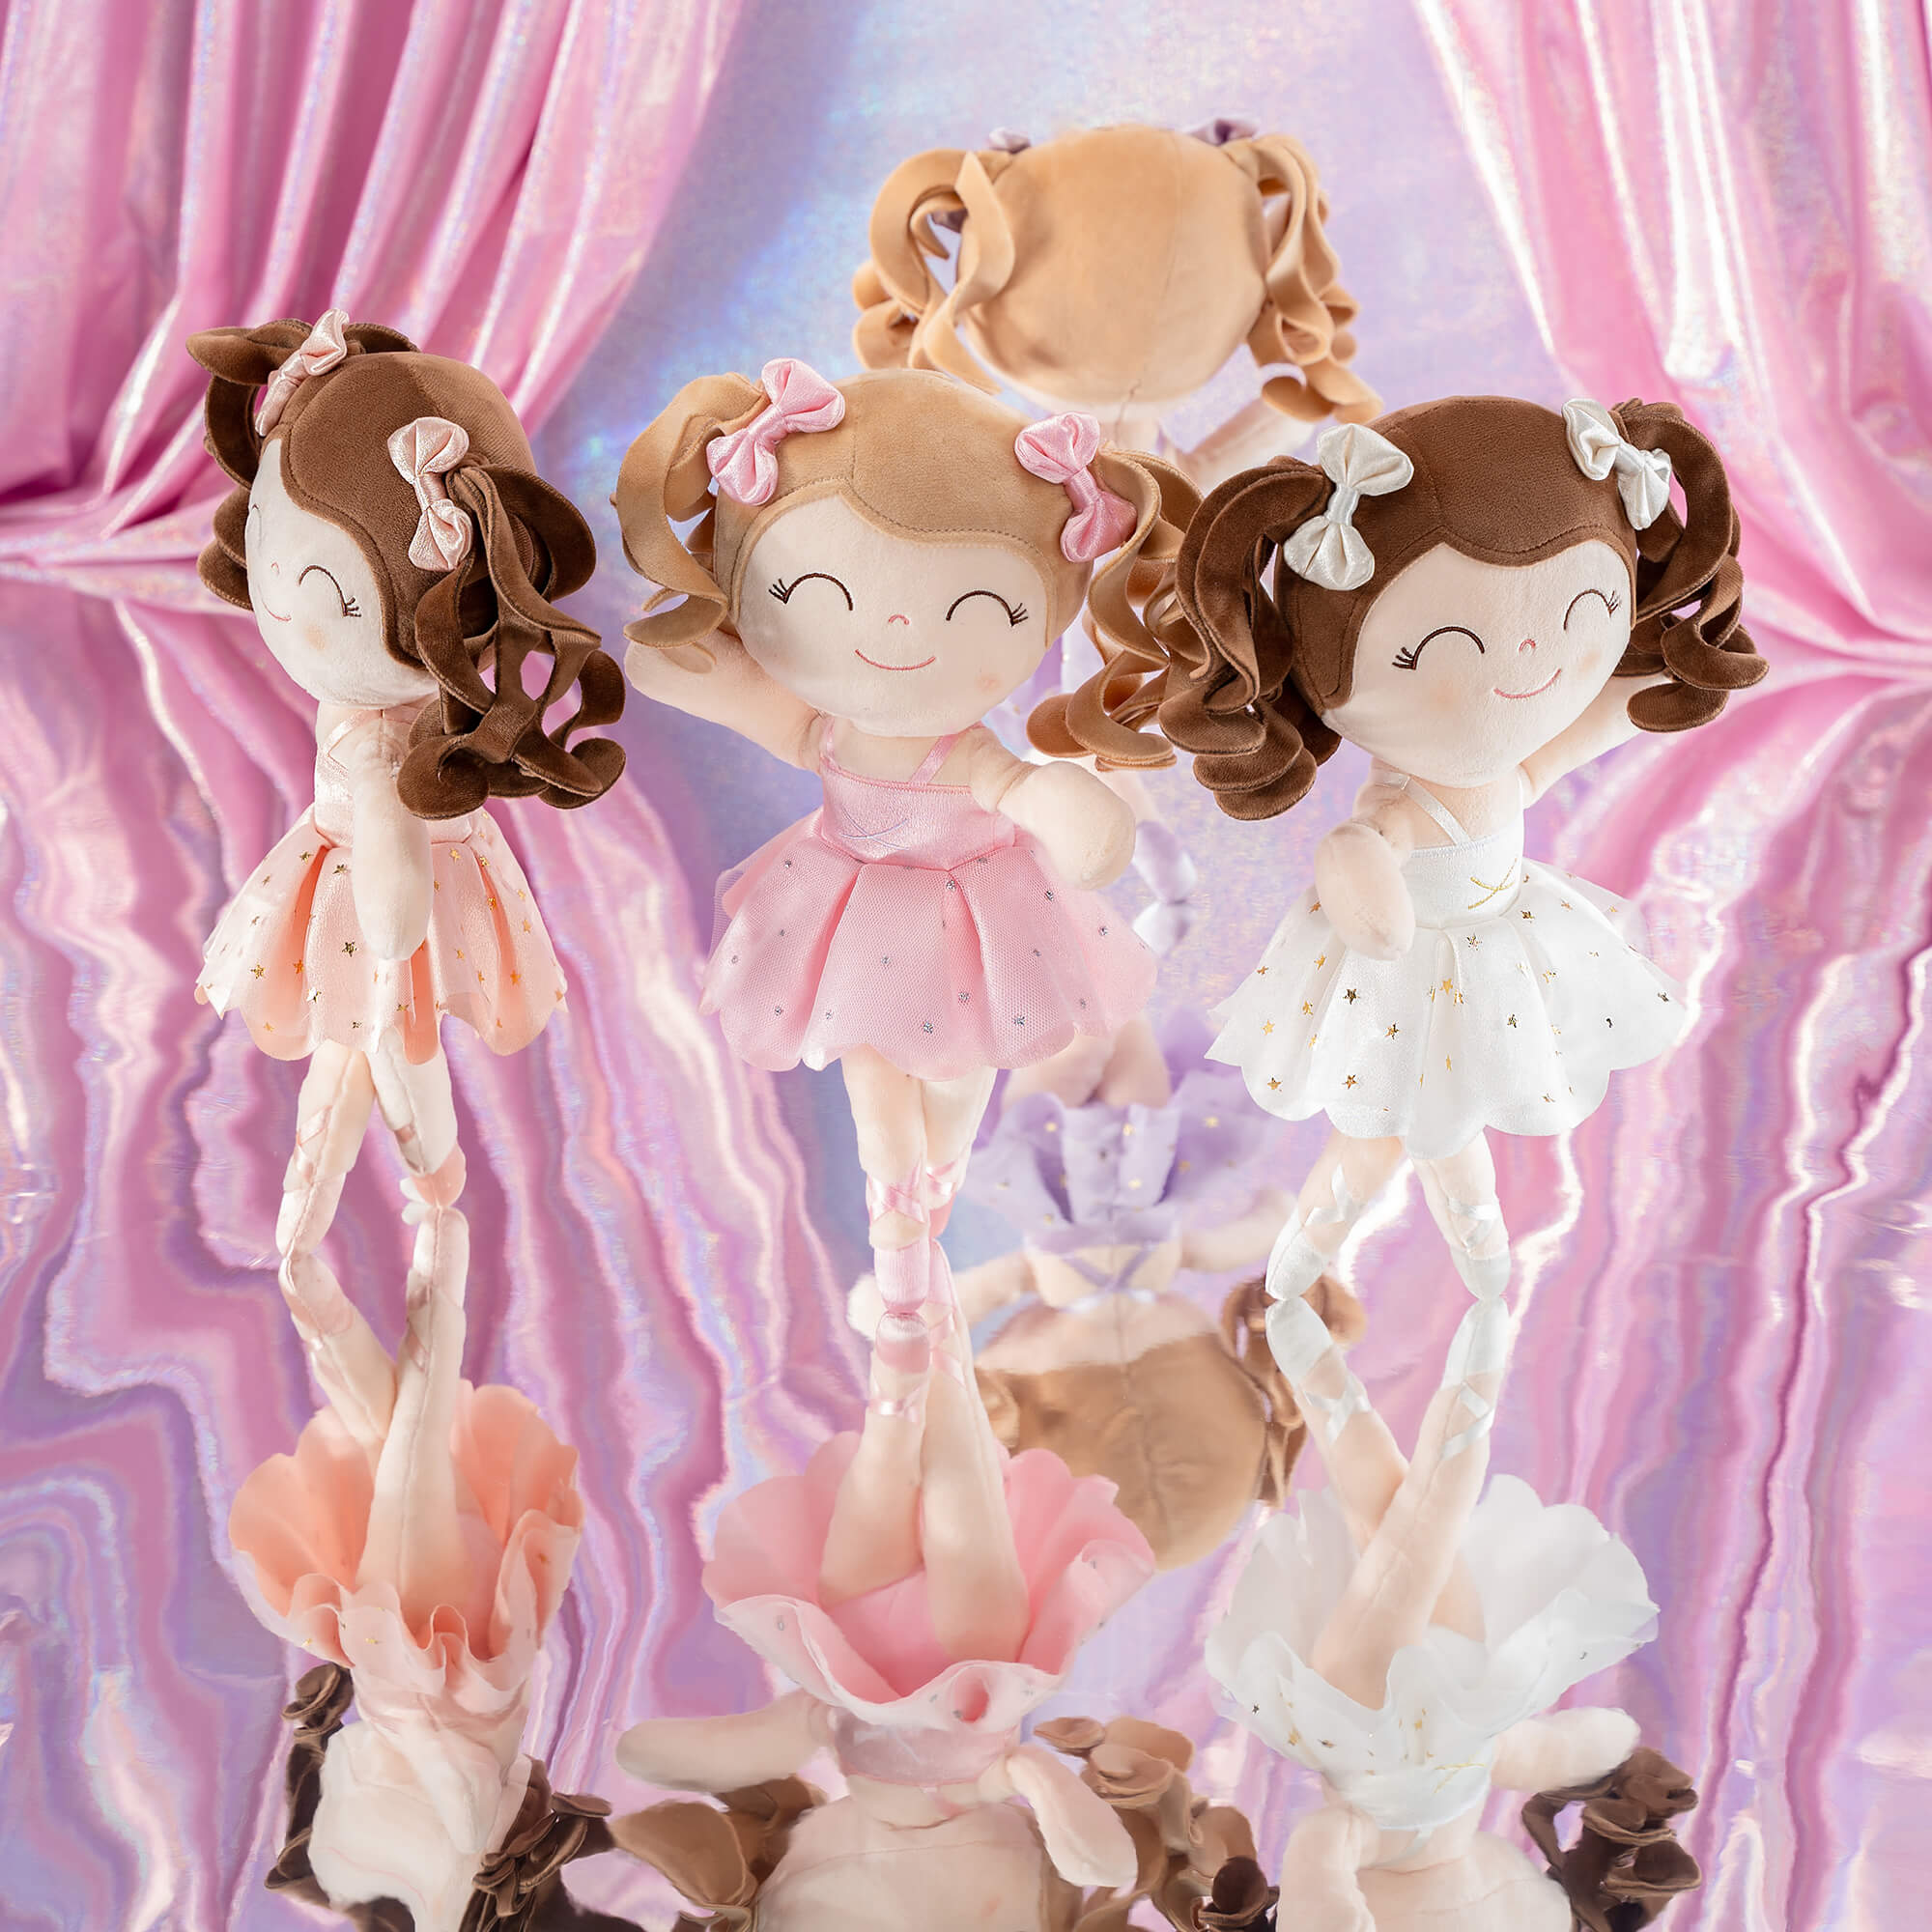 Gloveleya 14-inch Personalized Plush Dolls Curly Ballerina Series Ballet Dream